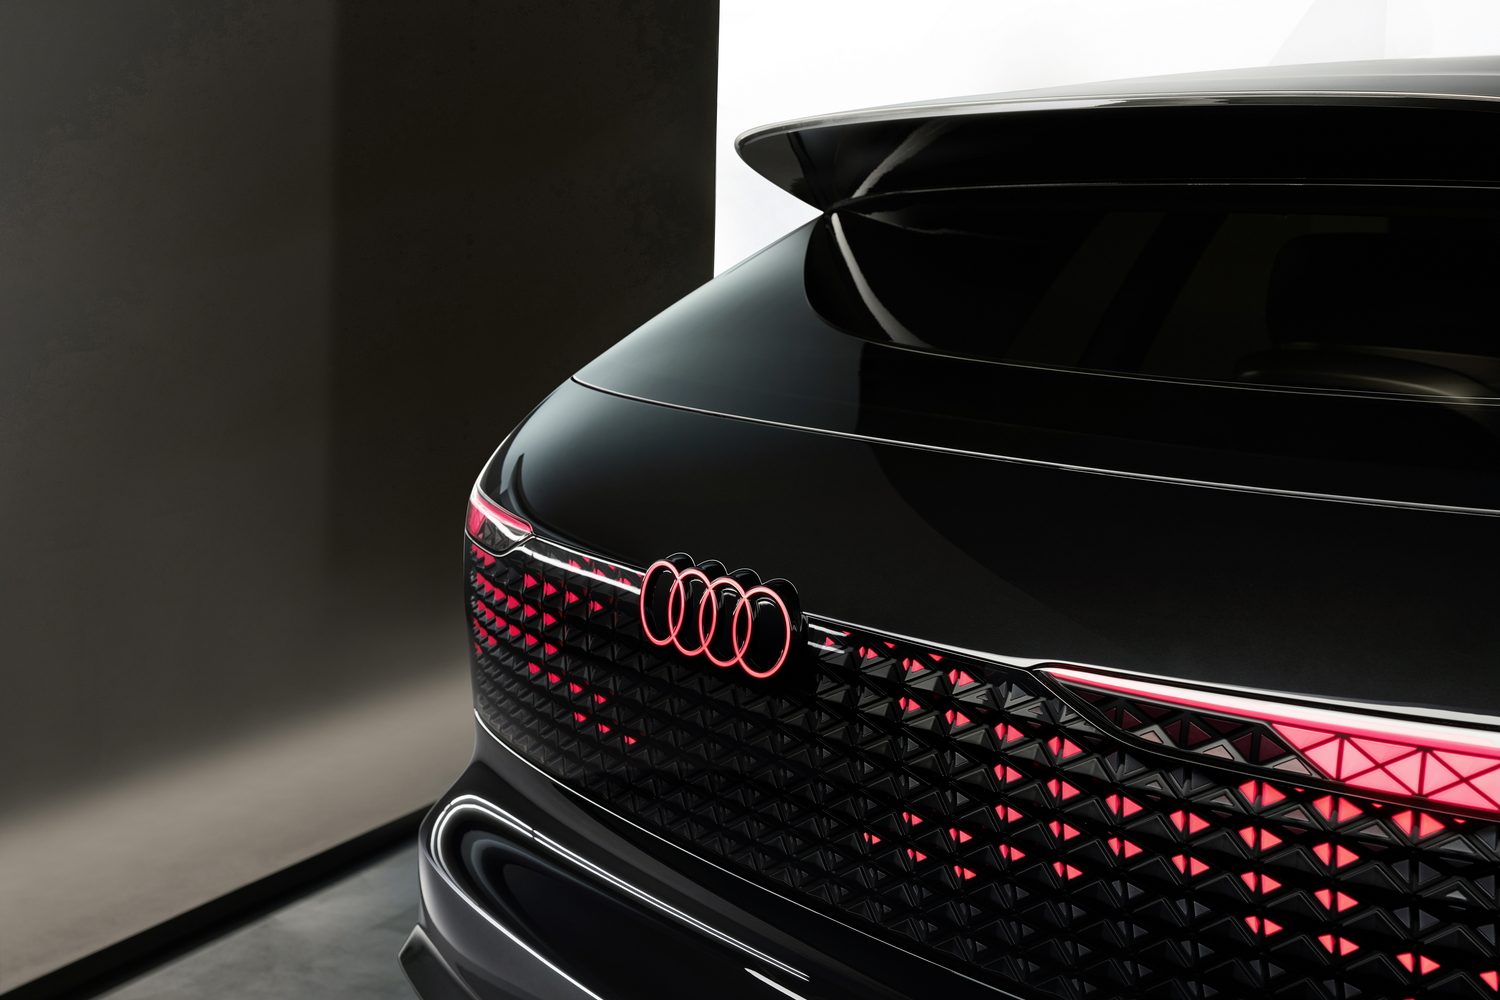 Audi reveals huge new Urbansphere concept